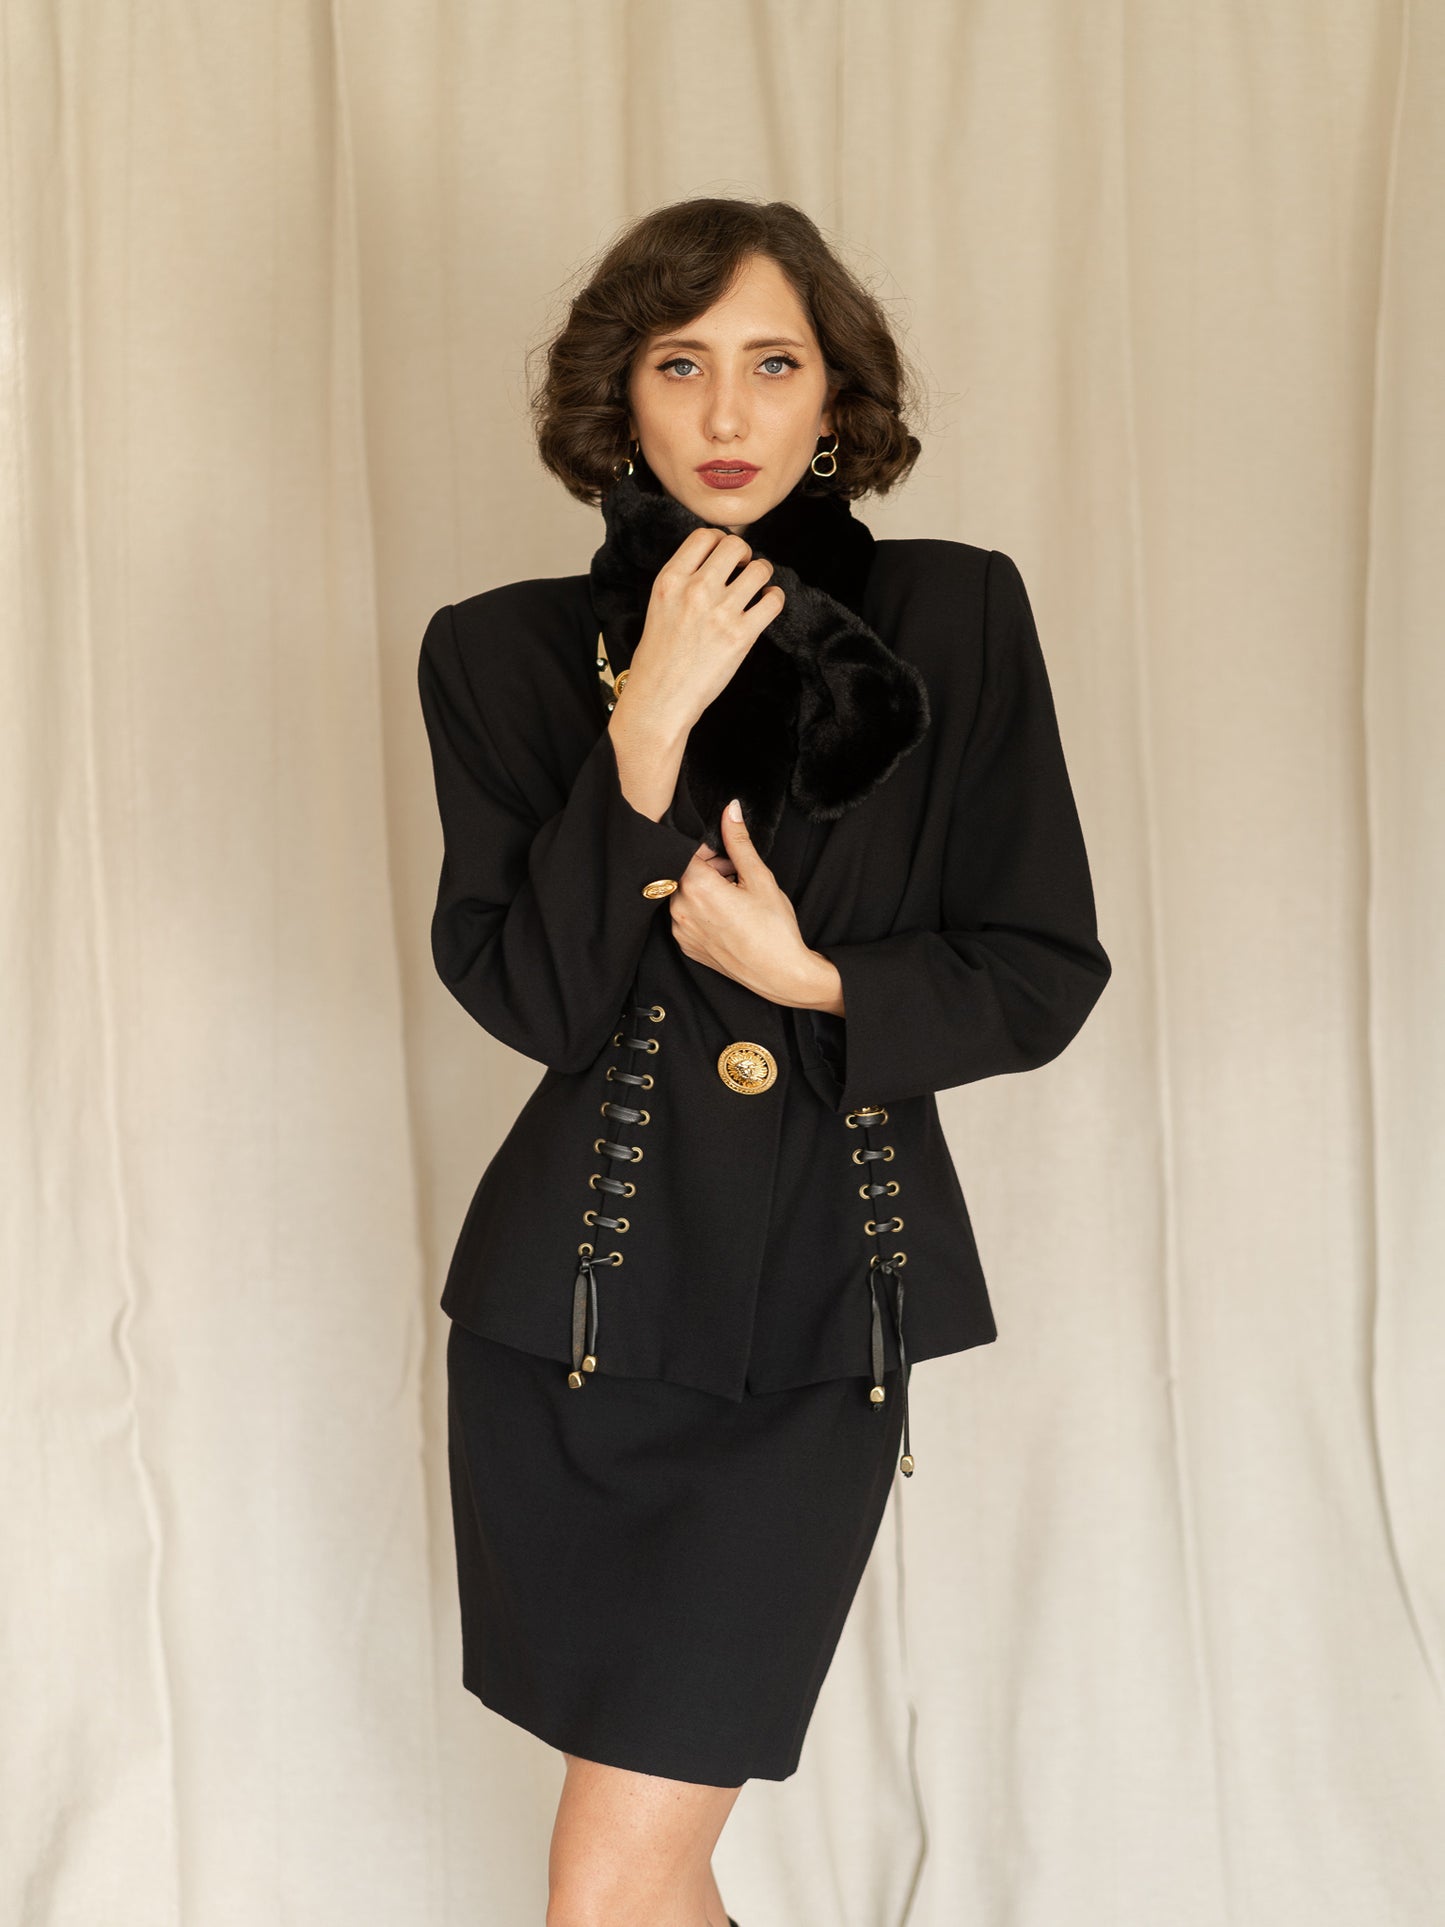 Vintage 80's Terry Paris Light Wool Black Skirt Suit (38)